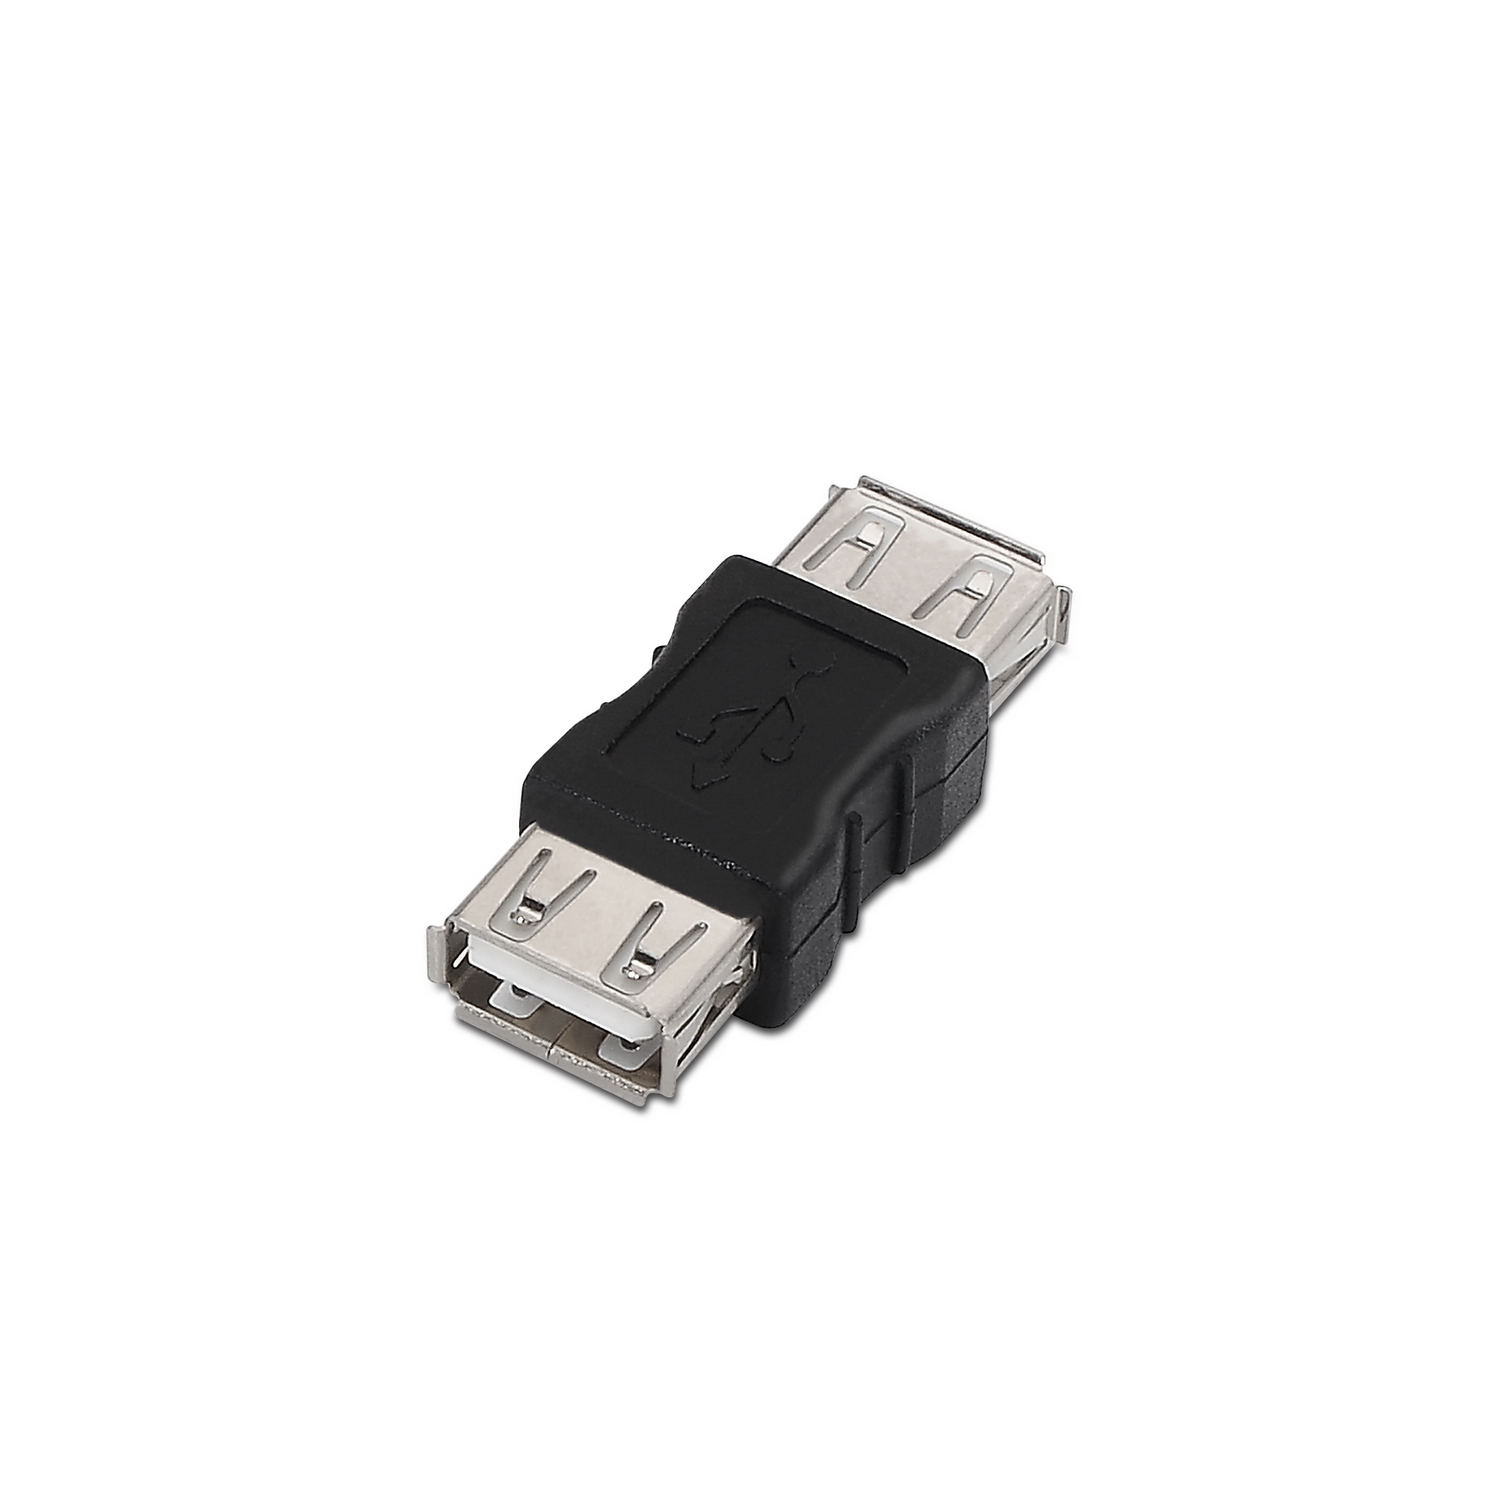 Cable USB 2.0 1.4M macho a hembra